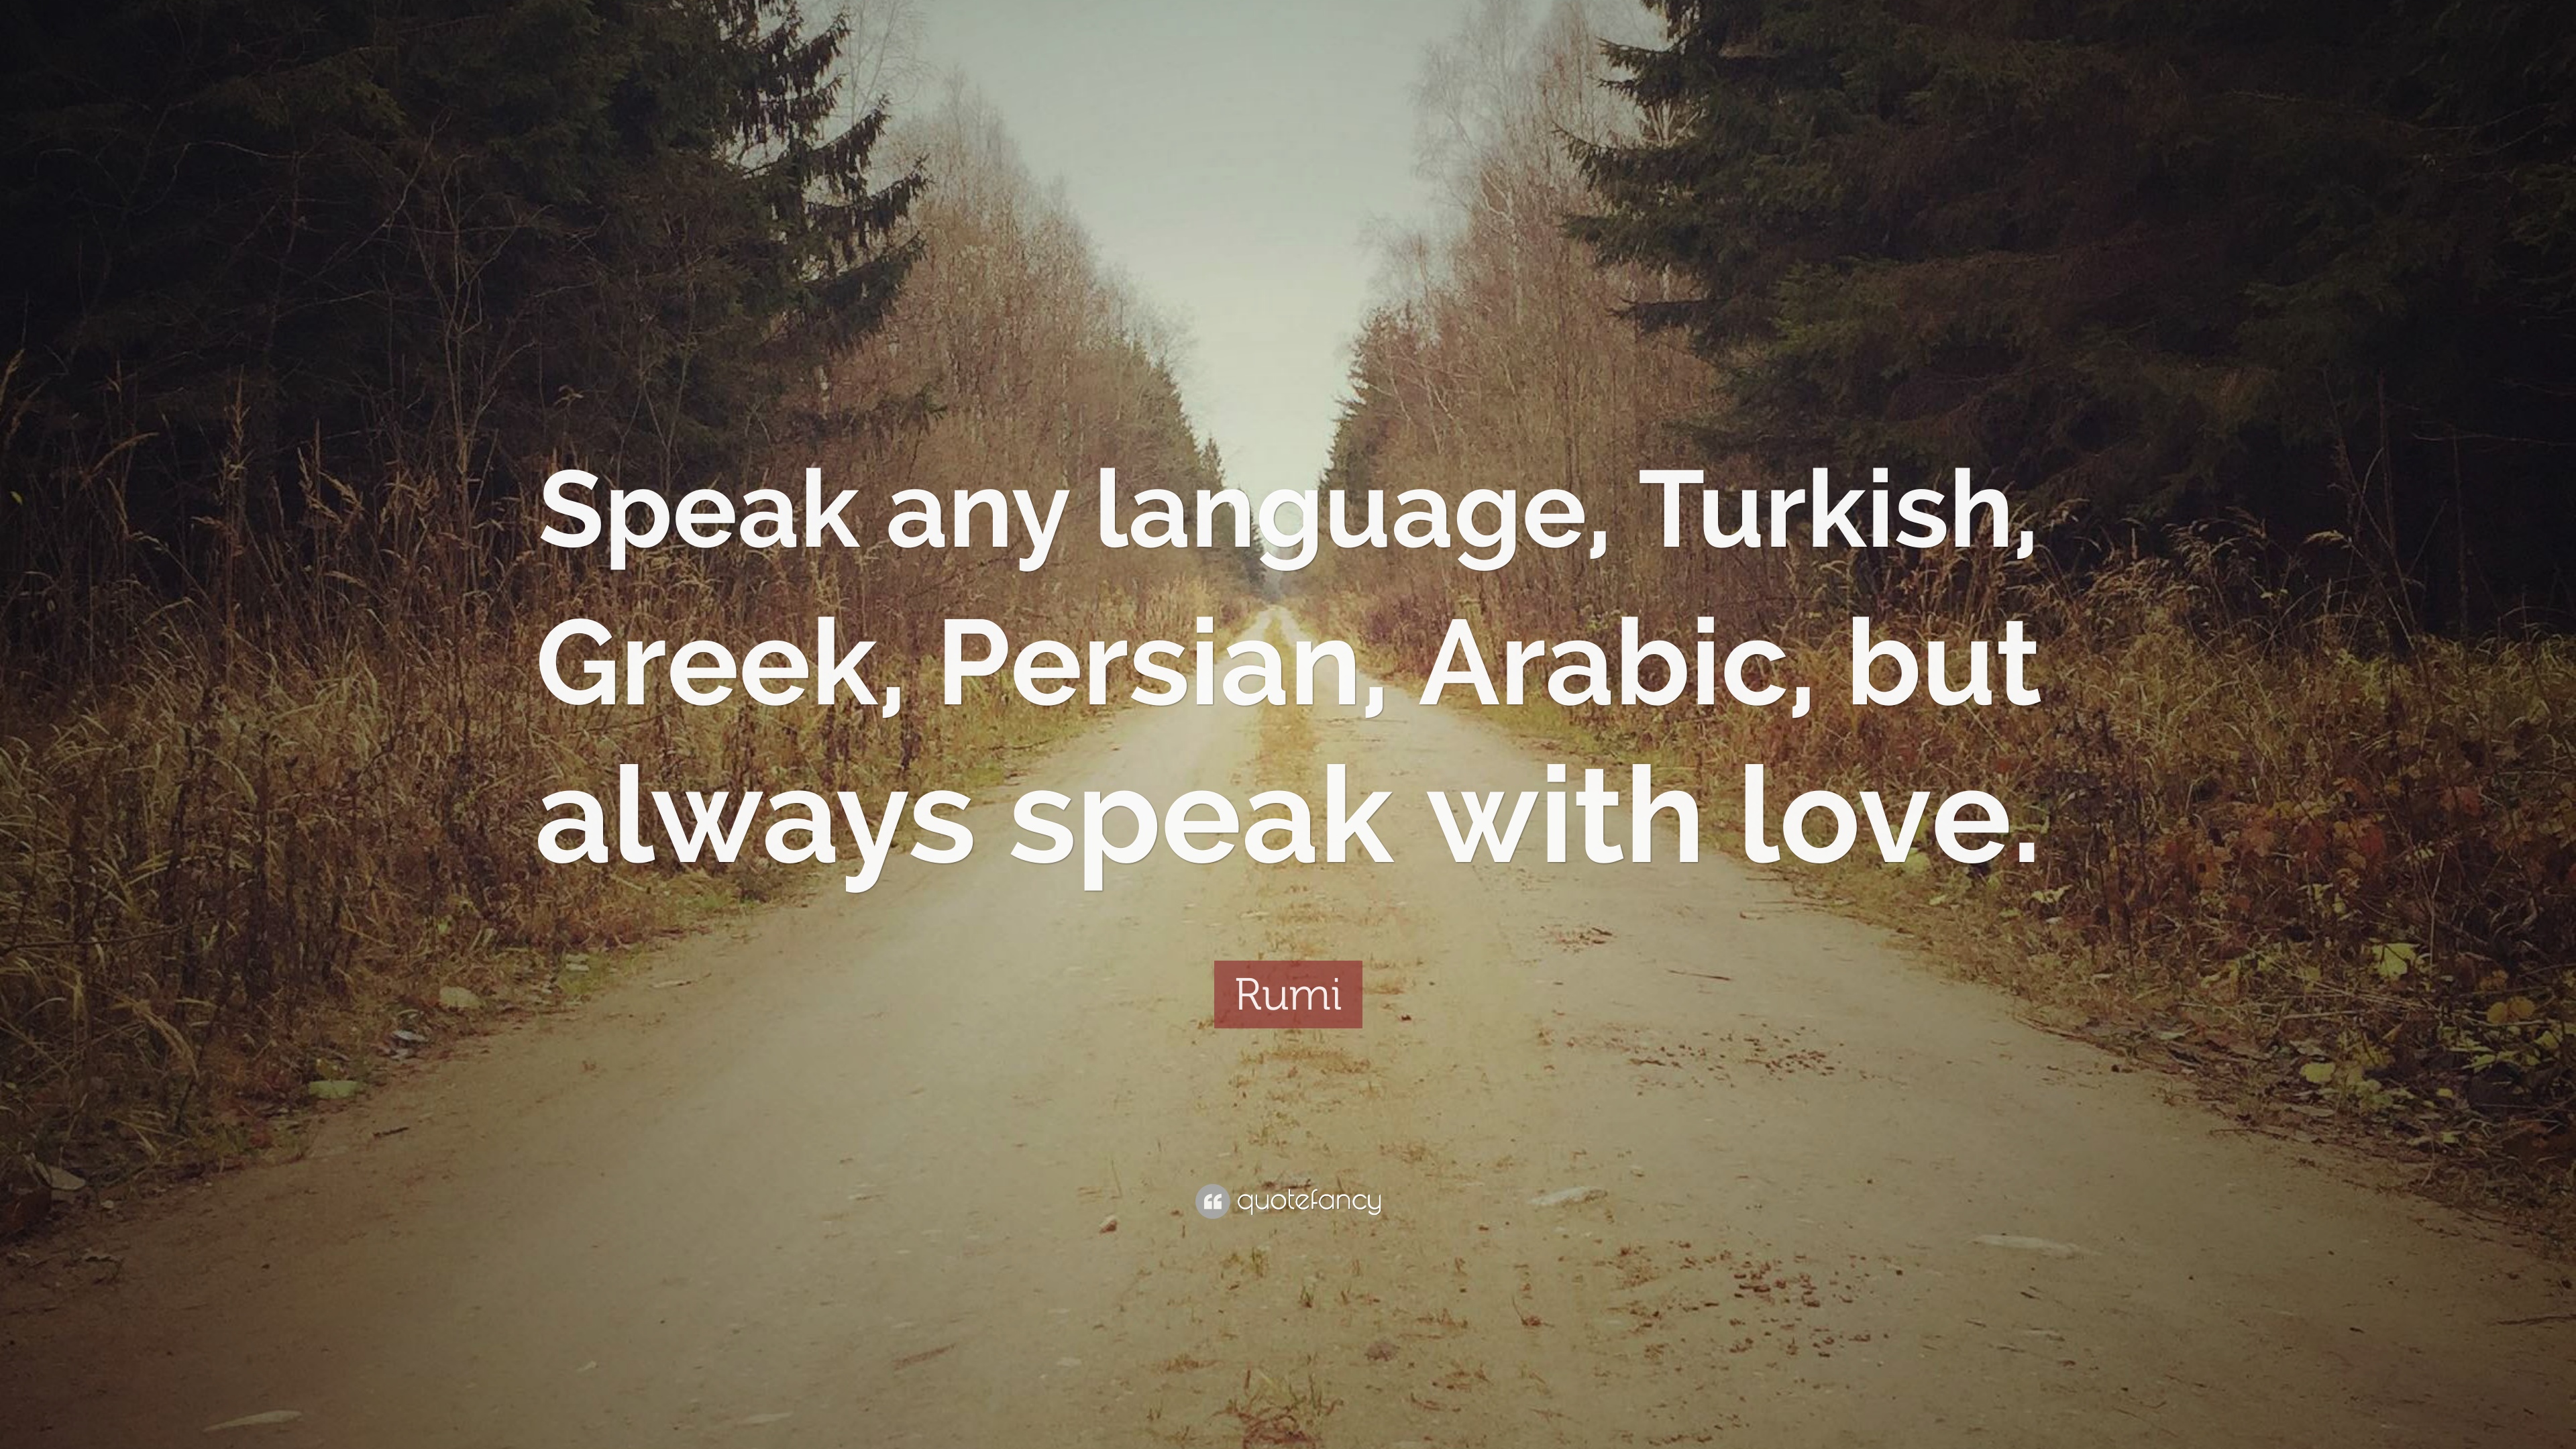 Rumi Quote: “Speak any language, Turkish, Greek, Persian, Arabic